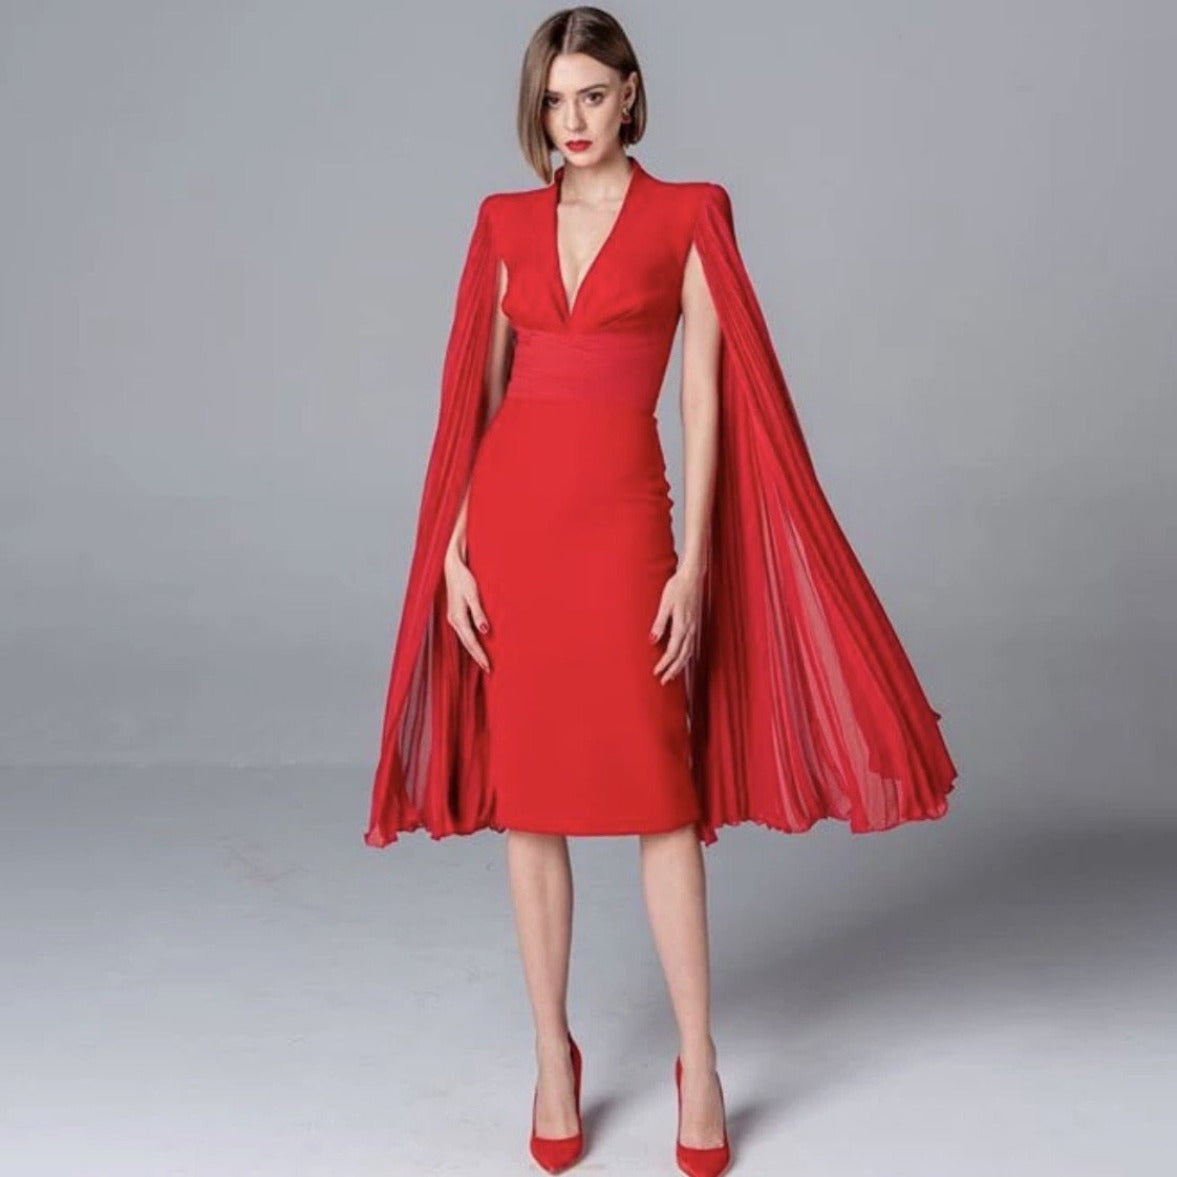 Red Dress By Obscur - Obscur international